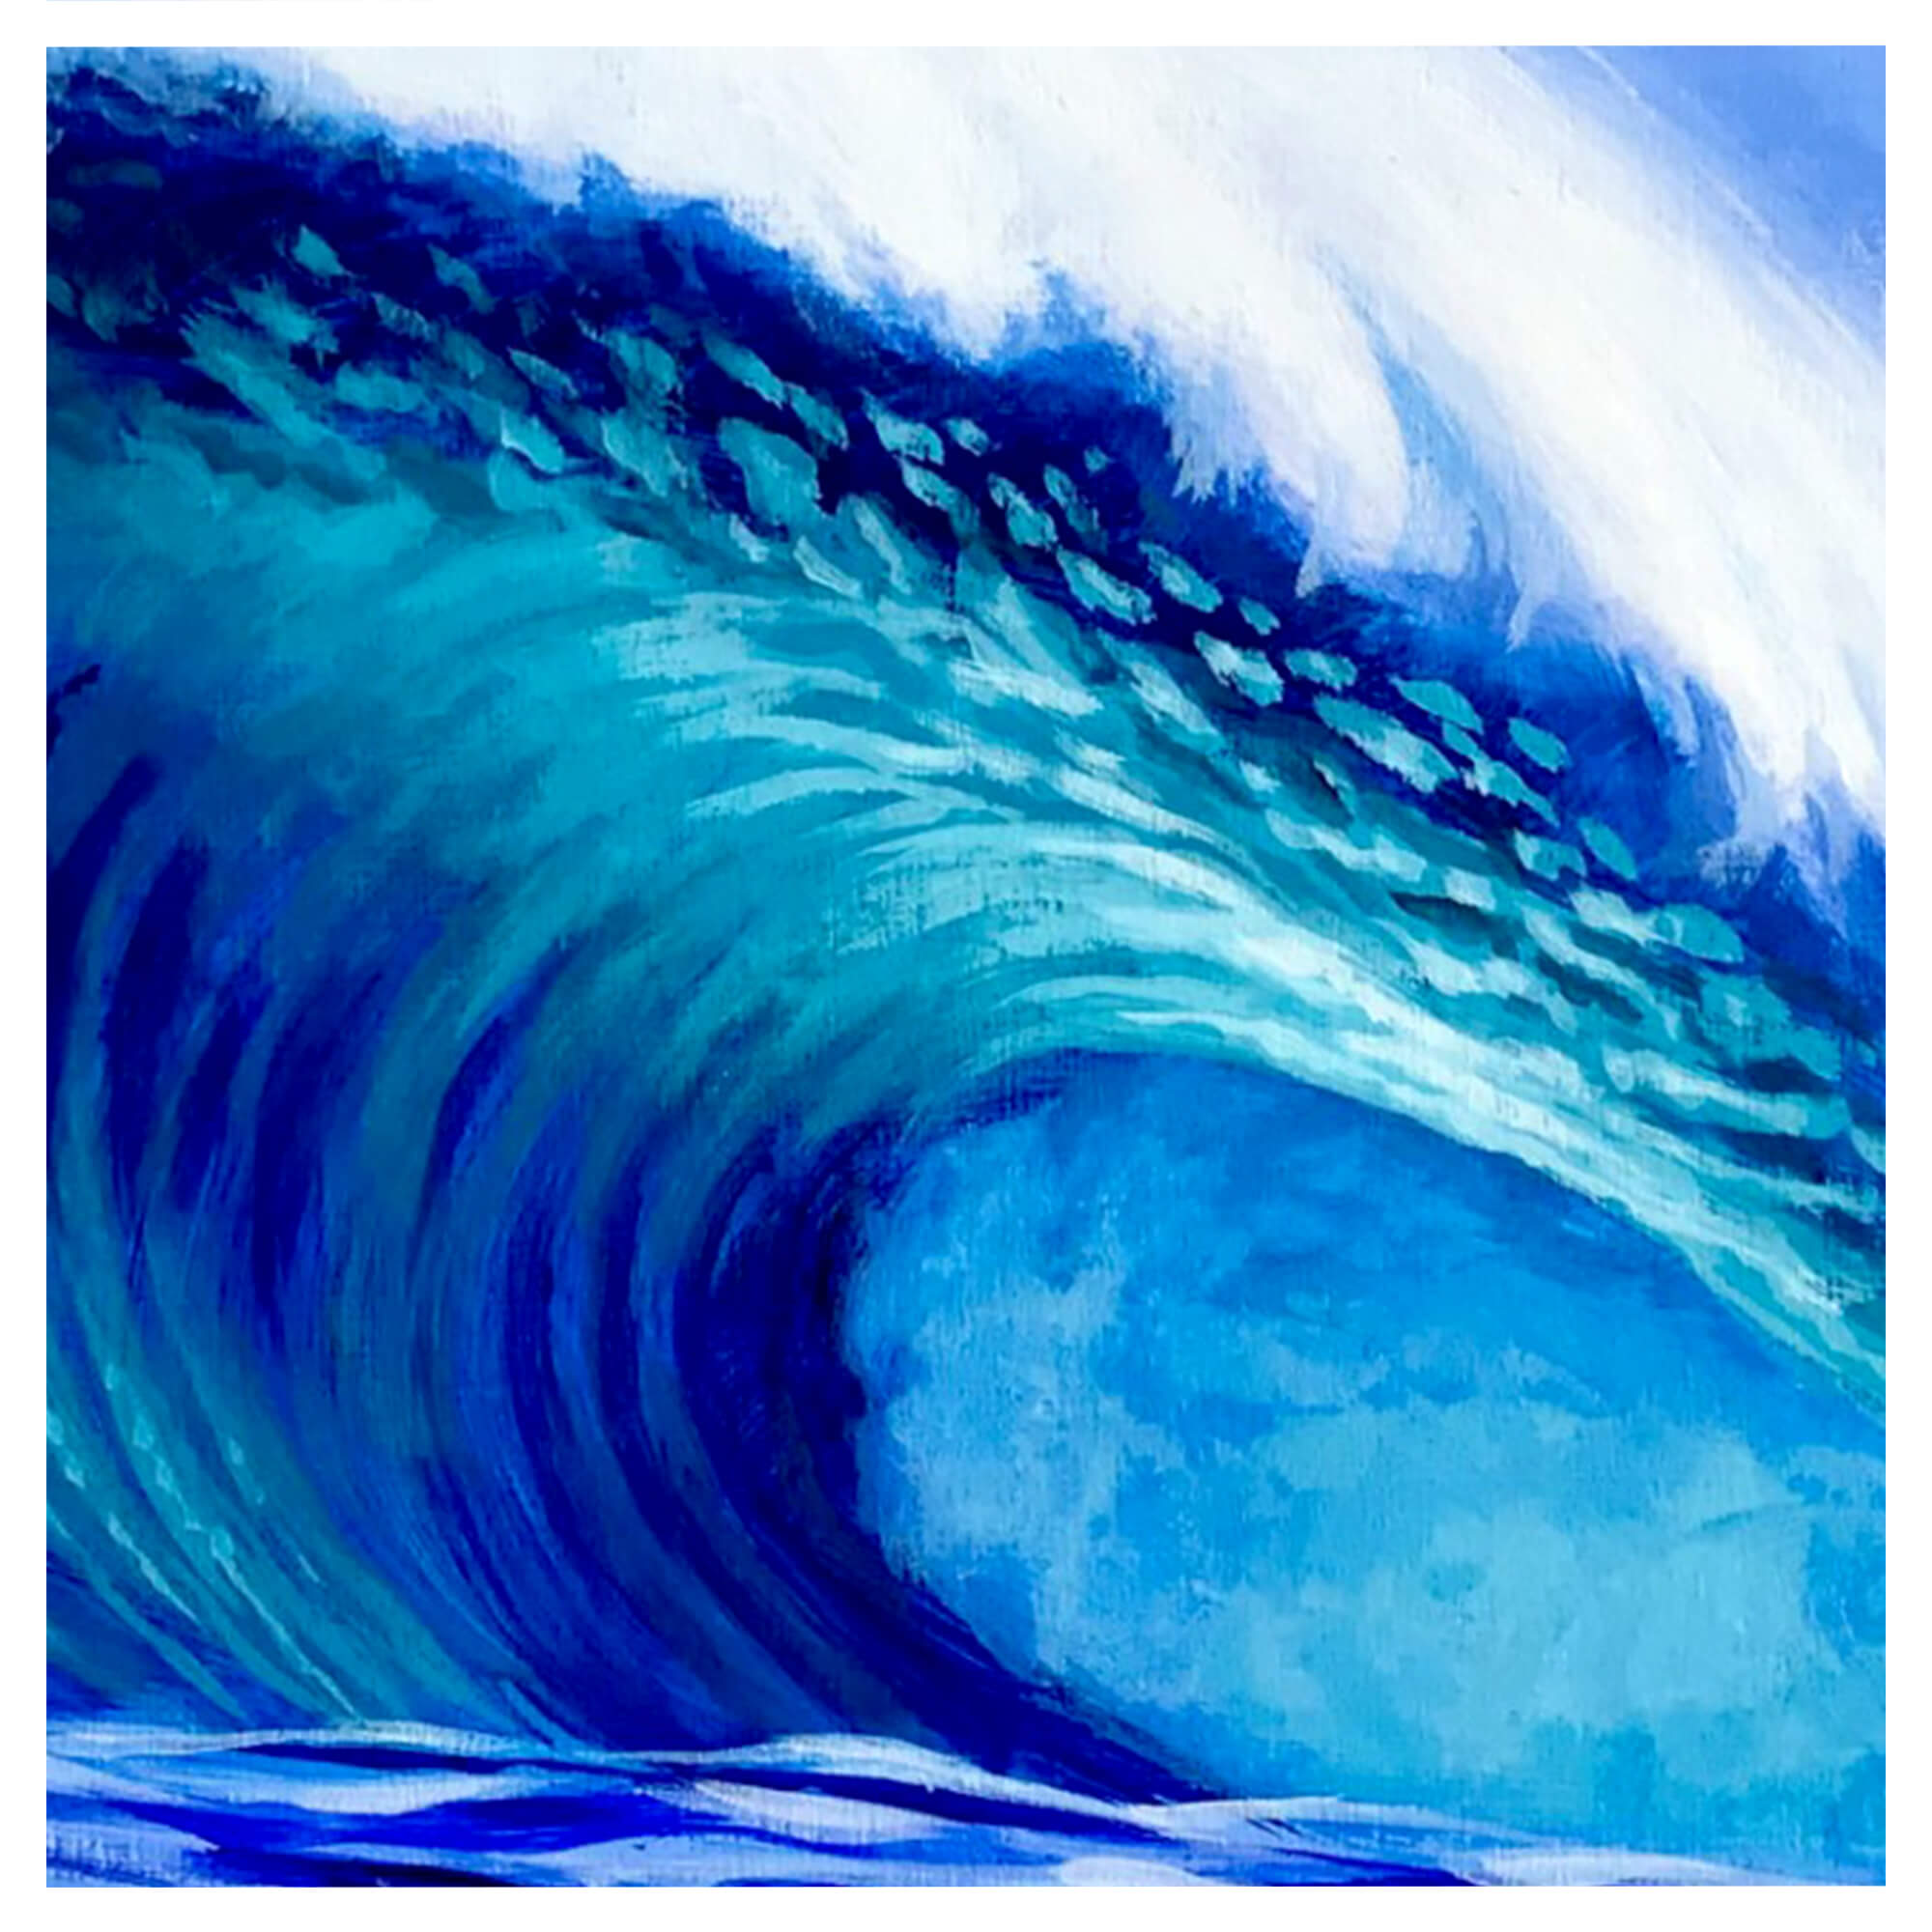 Blue barrel wave art by Hawaii artist Patrick Parker